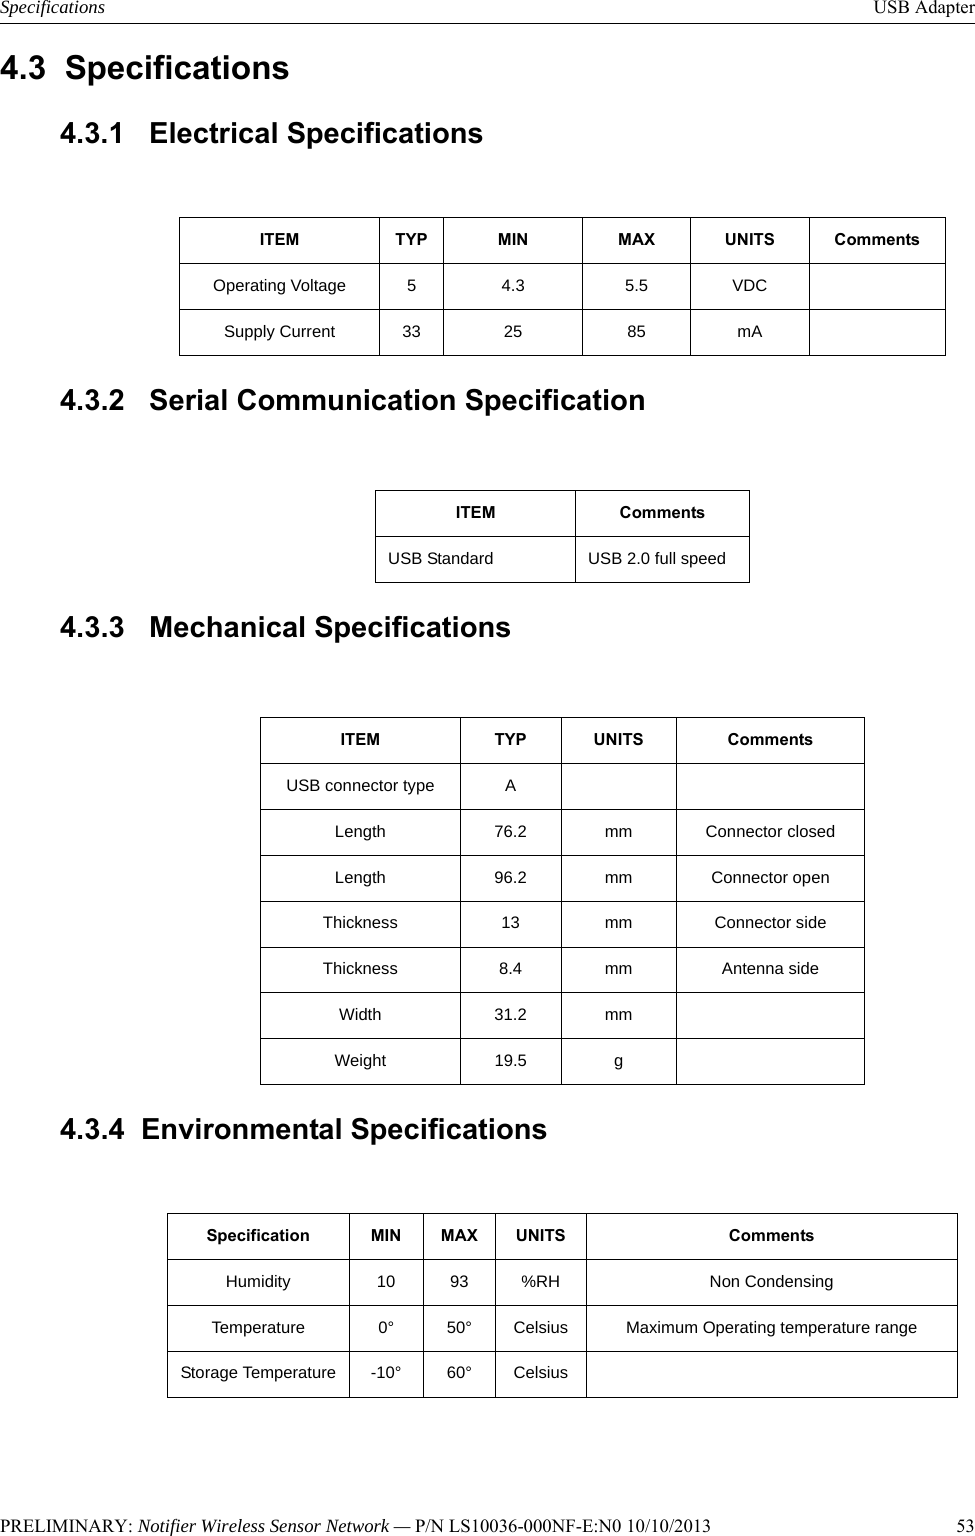 PRELIMINARY: Notifier Wireless Sensor Network — P/N LS10036-000NF-E:N0 10/10/2013   53Specifications USB Adapter4.3  Specifications4.3.1   Electrical Specifications4.3.2   Serial Communication Specification4.3.3   Mechanical Specifications4.3.4  Environmental SpecificationsITEM TYP MIN MAX UNITS CommentsOperating Voltage 5 4.3 5.5 VDCSupply Current 33 25 85 mAITEM CommentsUSB Standard USB 2.0 full speedITEM TYP UNITS CommentsUSB connector type ALength 76.2 mm Connector closedLength 96.2 mm Connector openThickness 13 mm Connector sideThickness 8.4 mm Antenna sideWidth 31.2 mmWeight 19.5 gSpecification MIN MAX UNITS CommentsHumidity 10 93 %RH Non CondensingTemperature 0° 50° Celsius Maximum Operating temperature rangeStorage Temperature -10° 60° Celsius